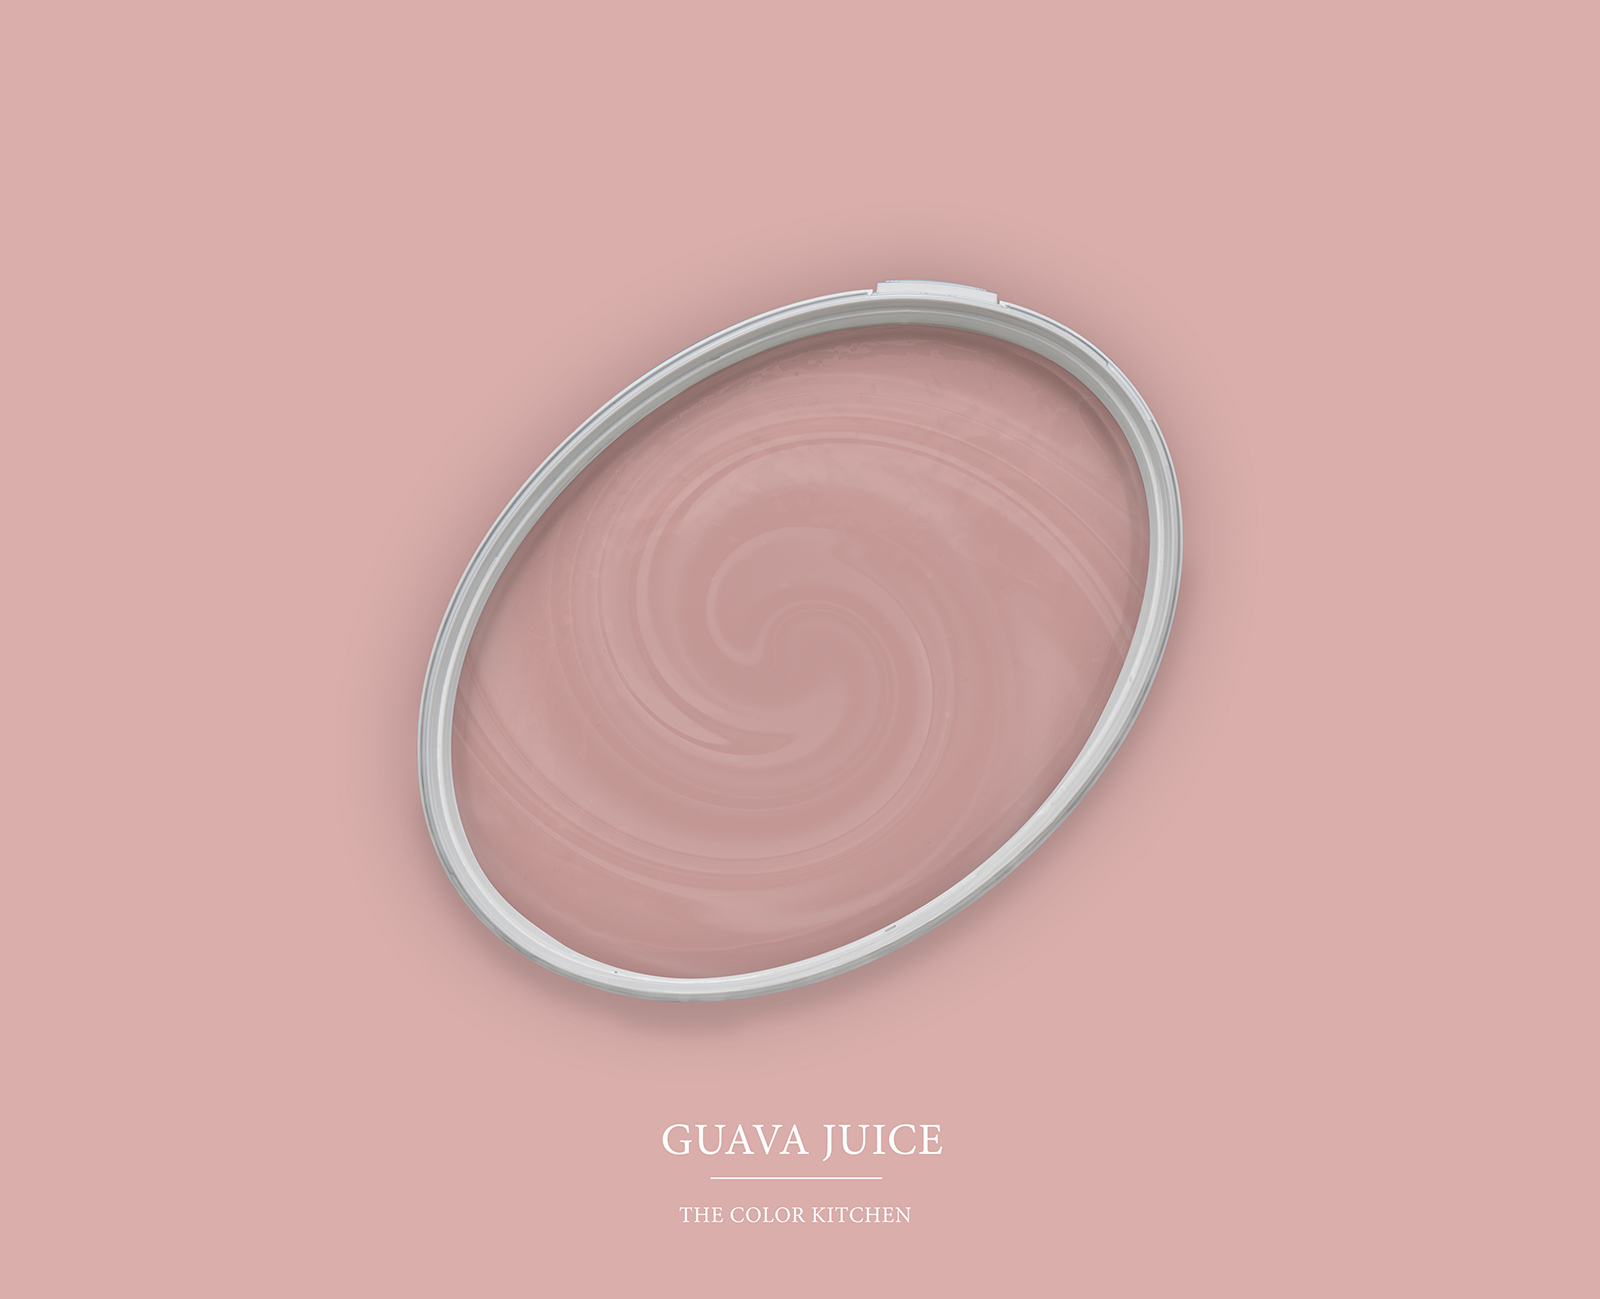         Wandfarbe in wohnlichem Altrosa »Guava Juice« TCK7009 – 2,5 Liter
    